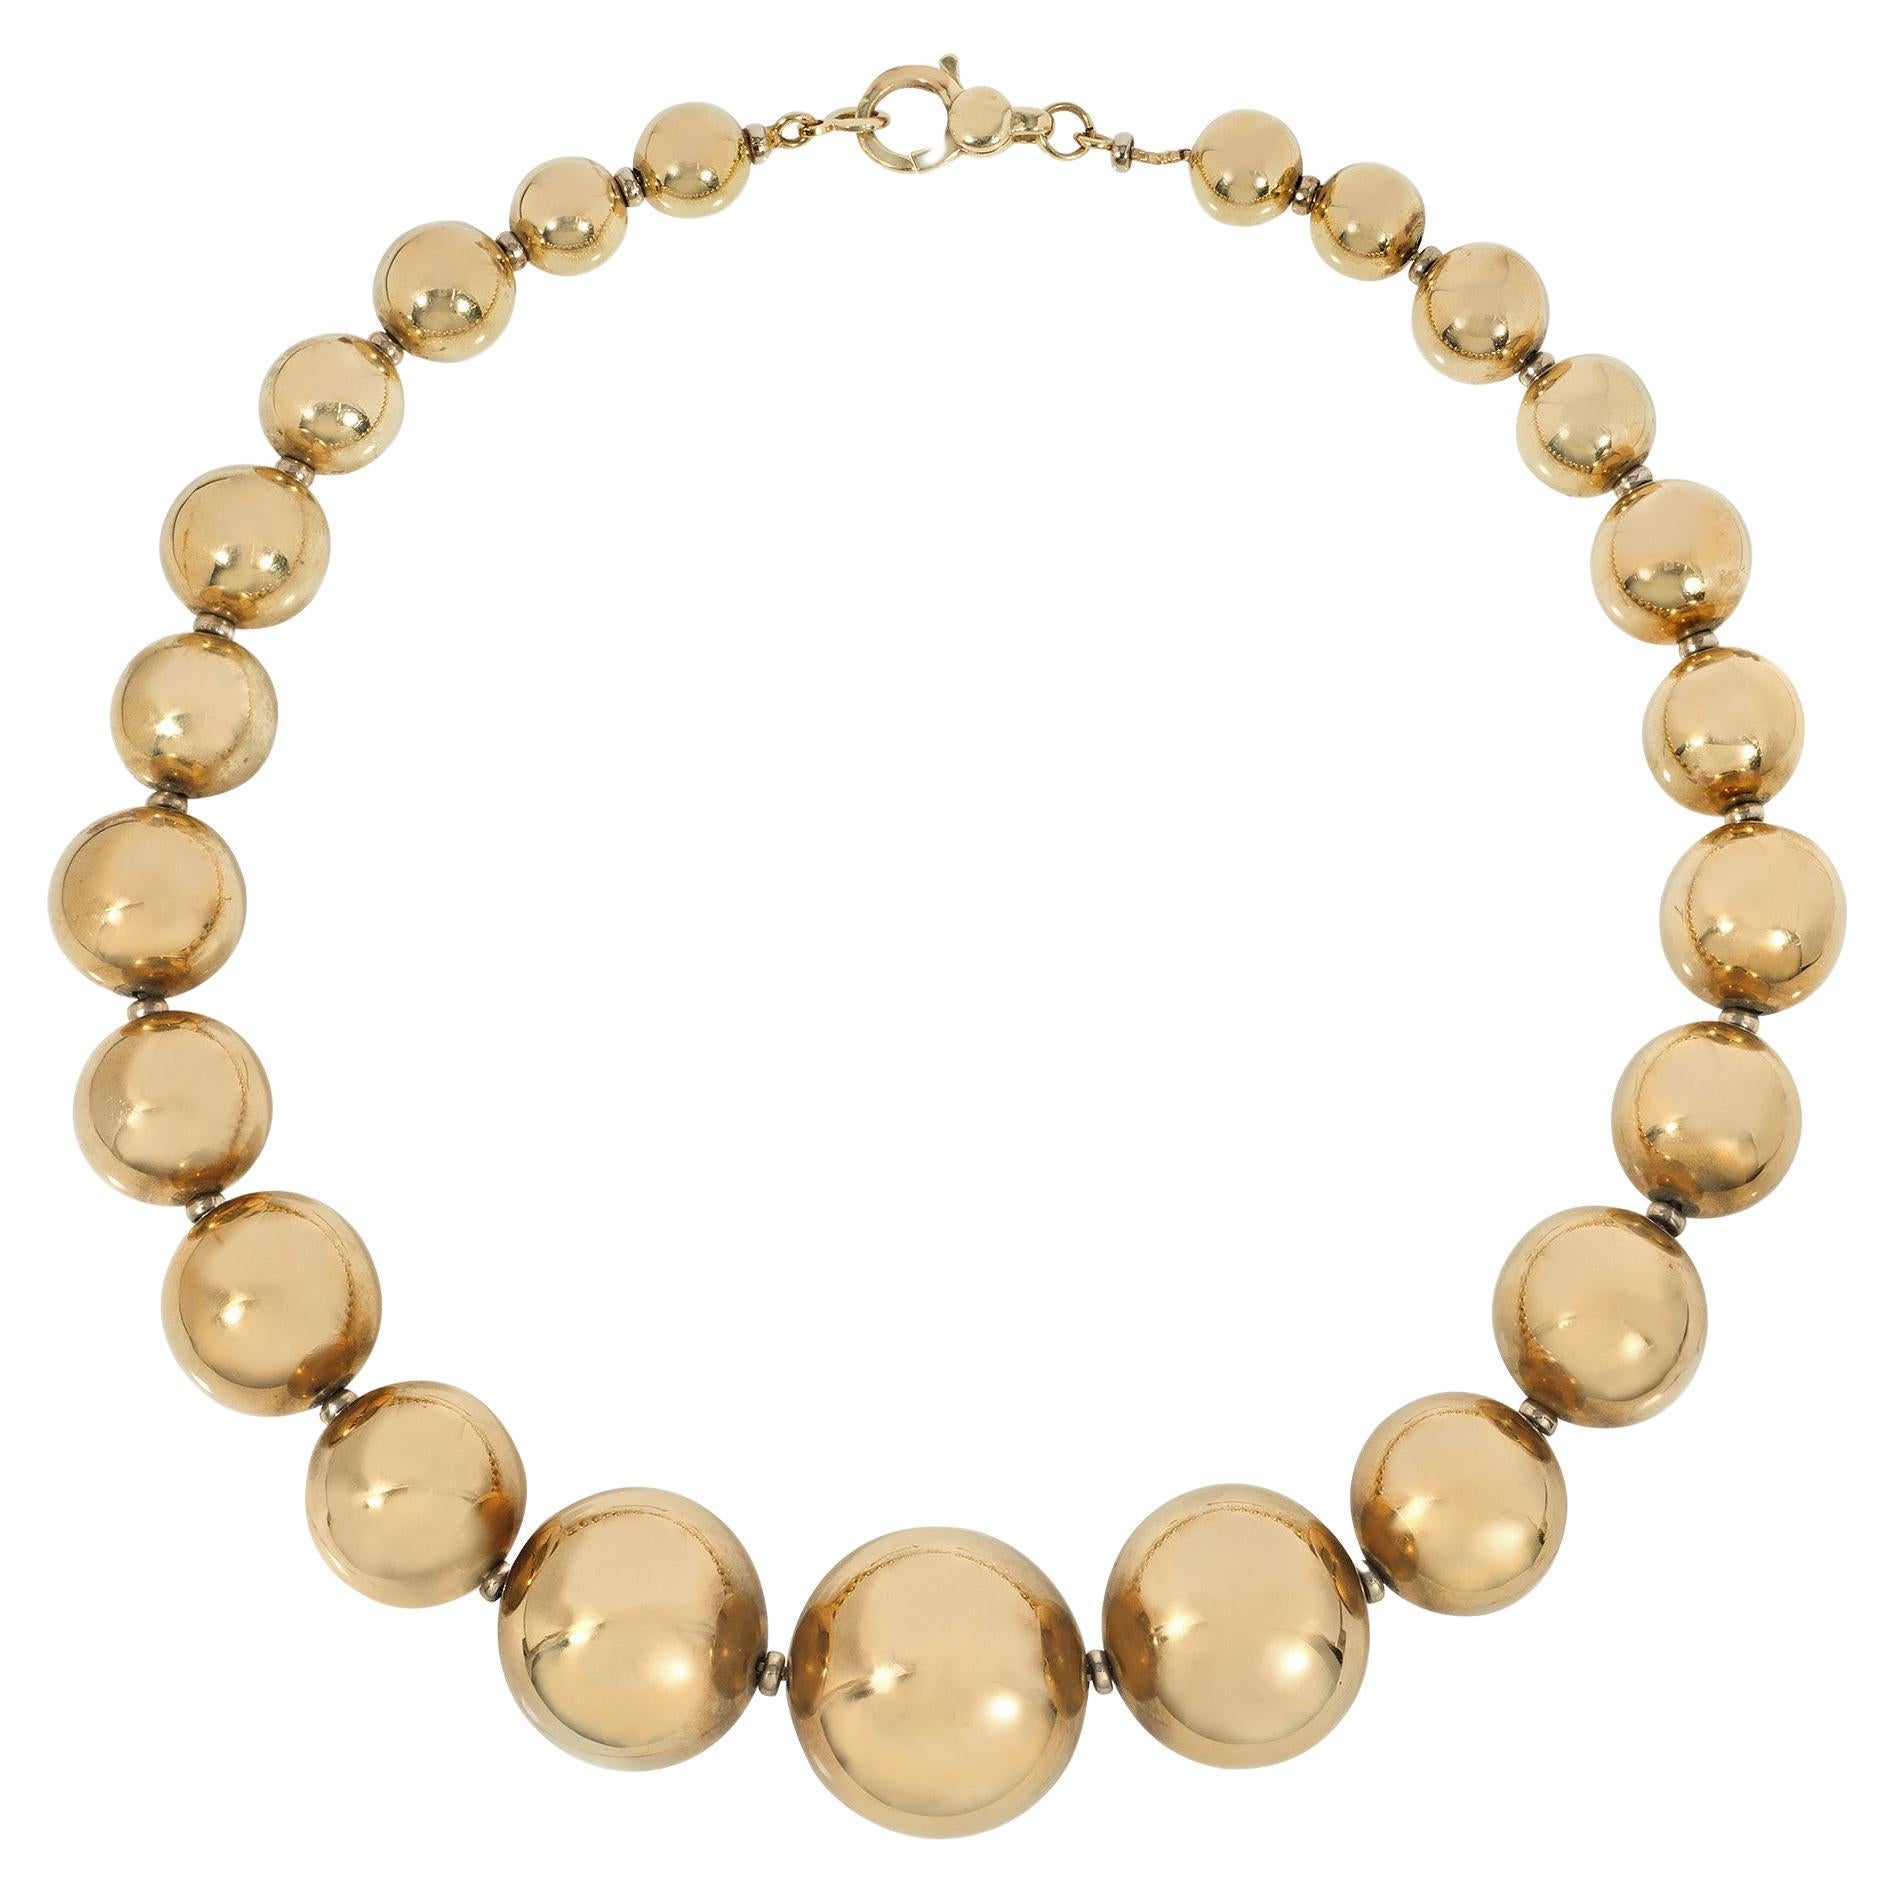 Collier italien de perles d'or graduées